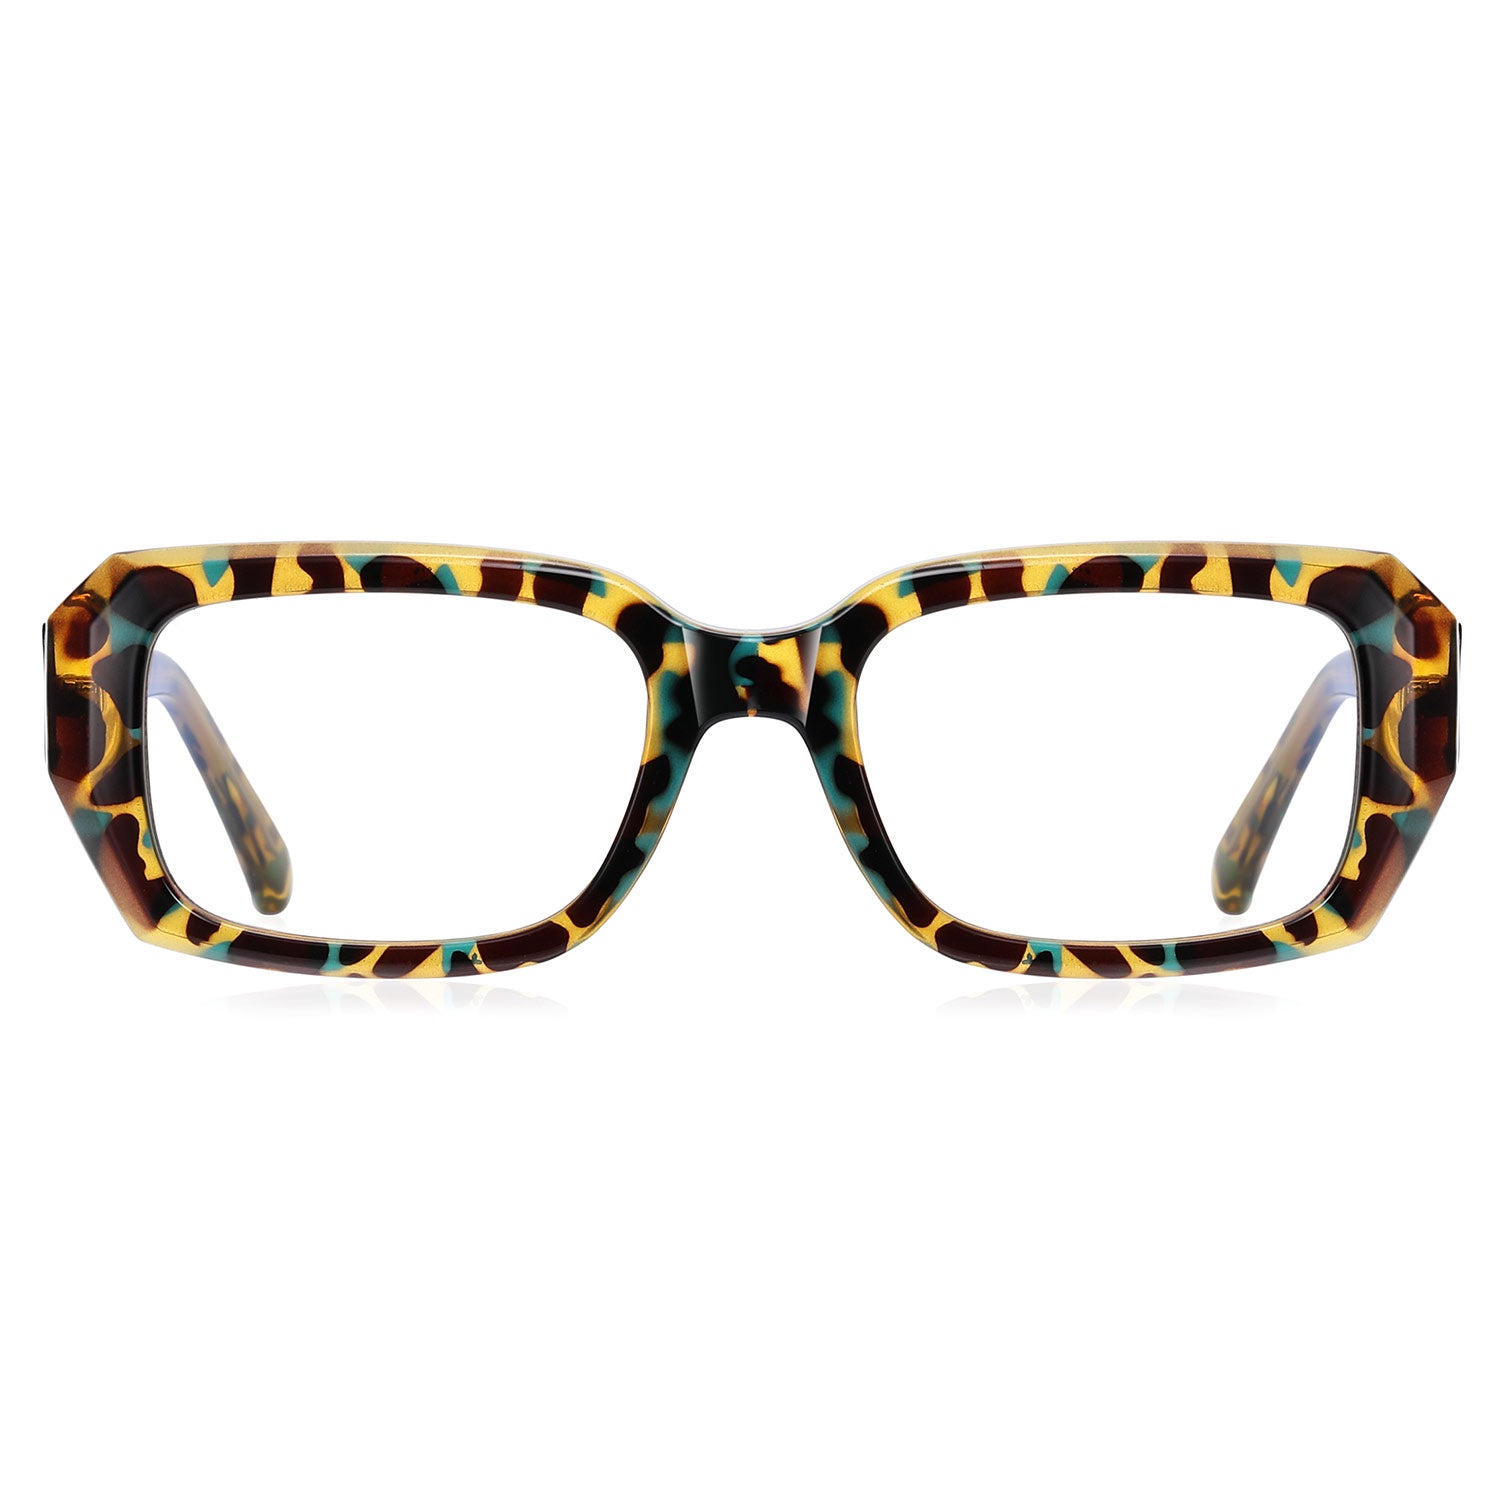 Become | Rectangle/Tortoise/TR90 - Eyeglasses | ELKLOOK